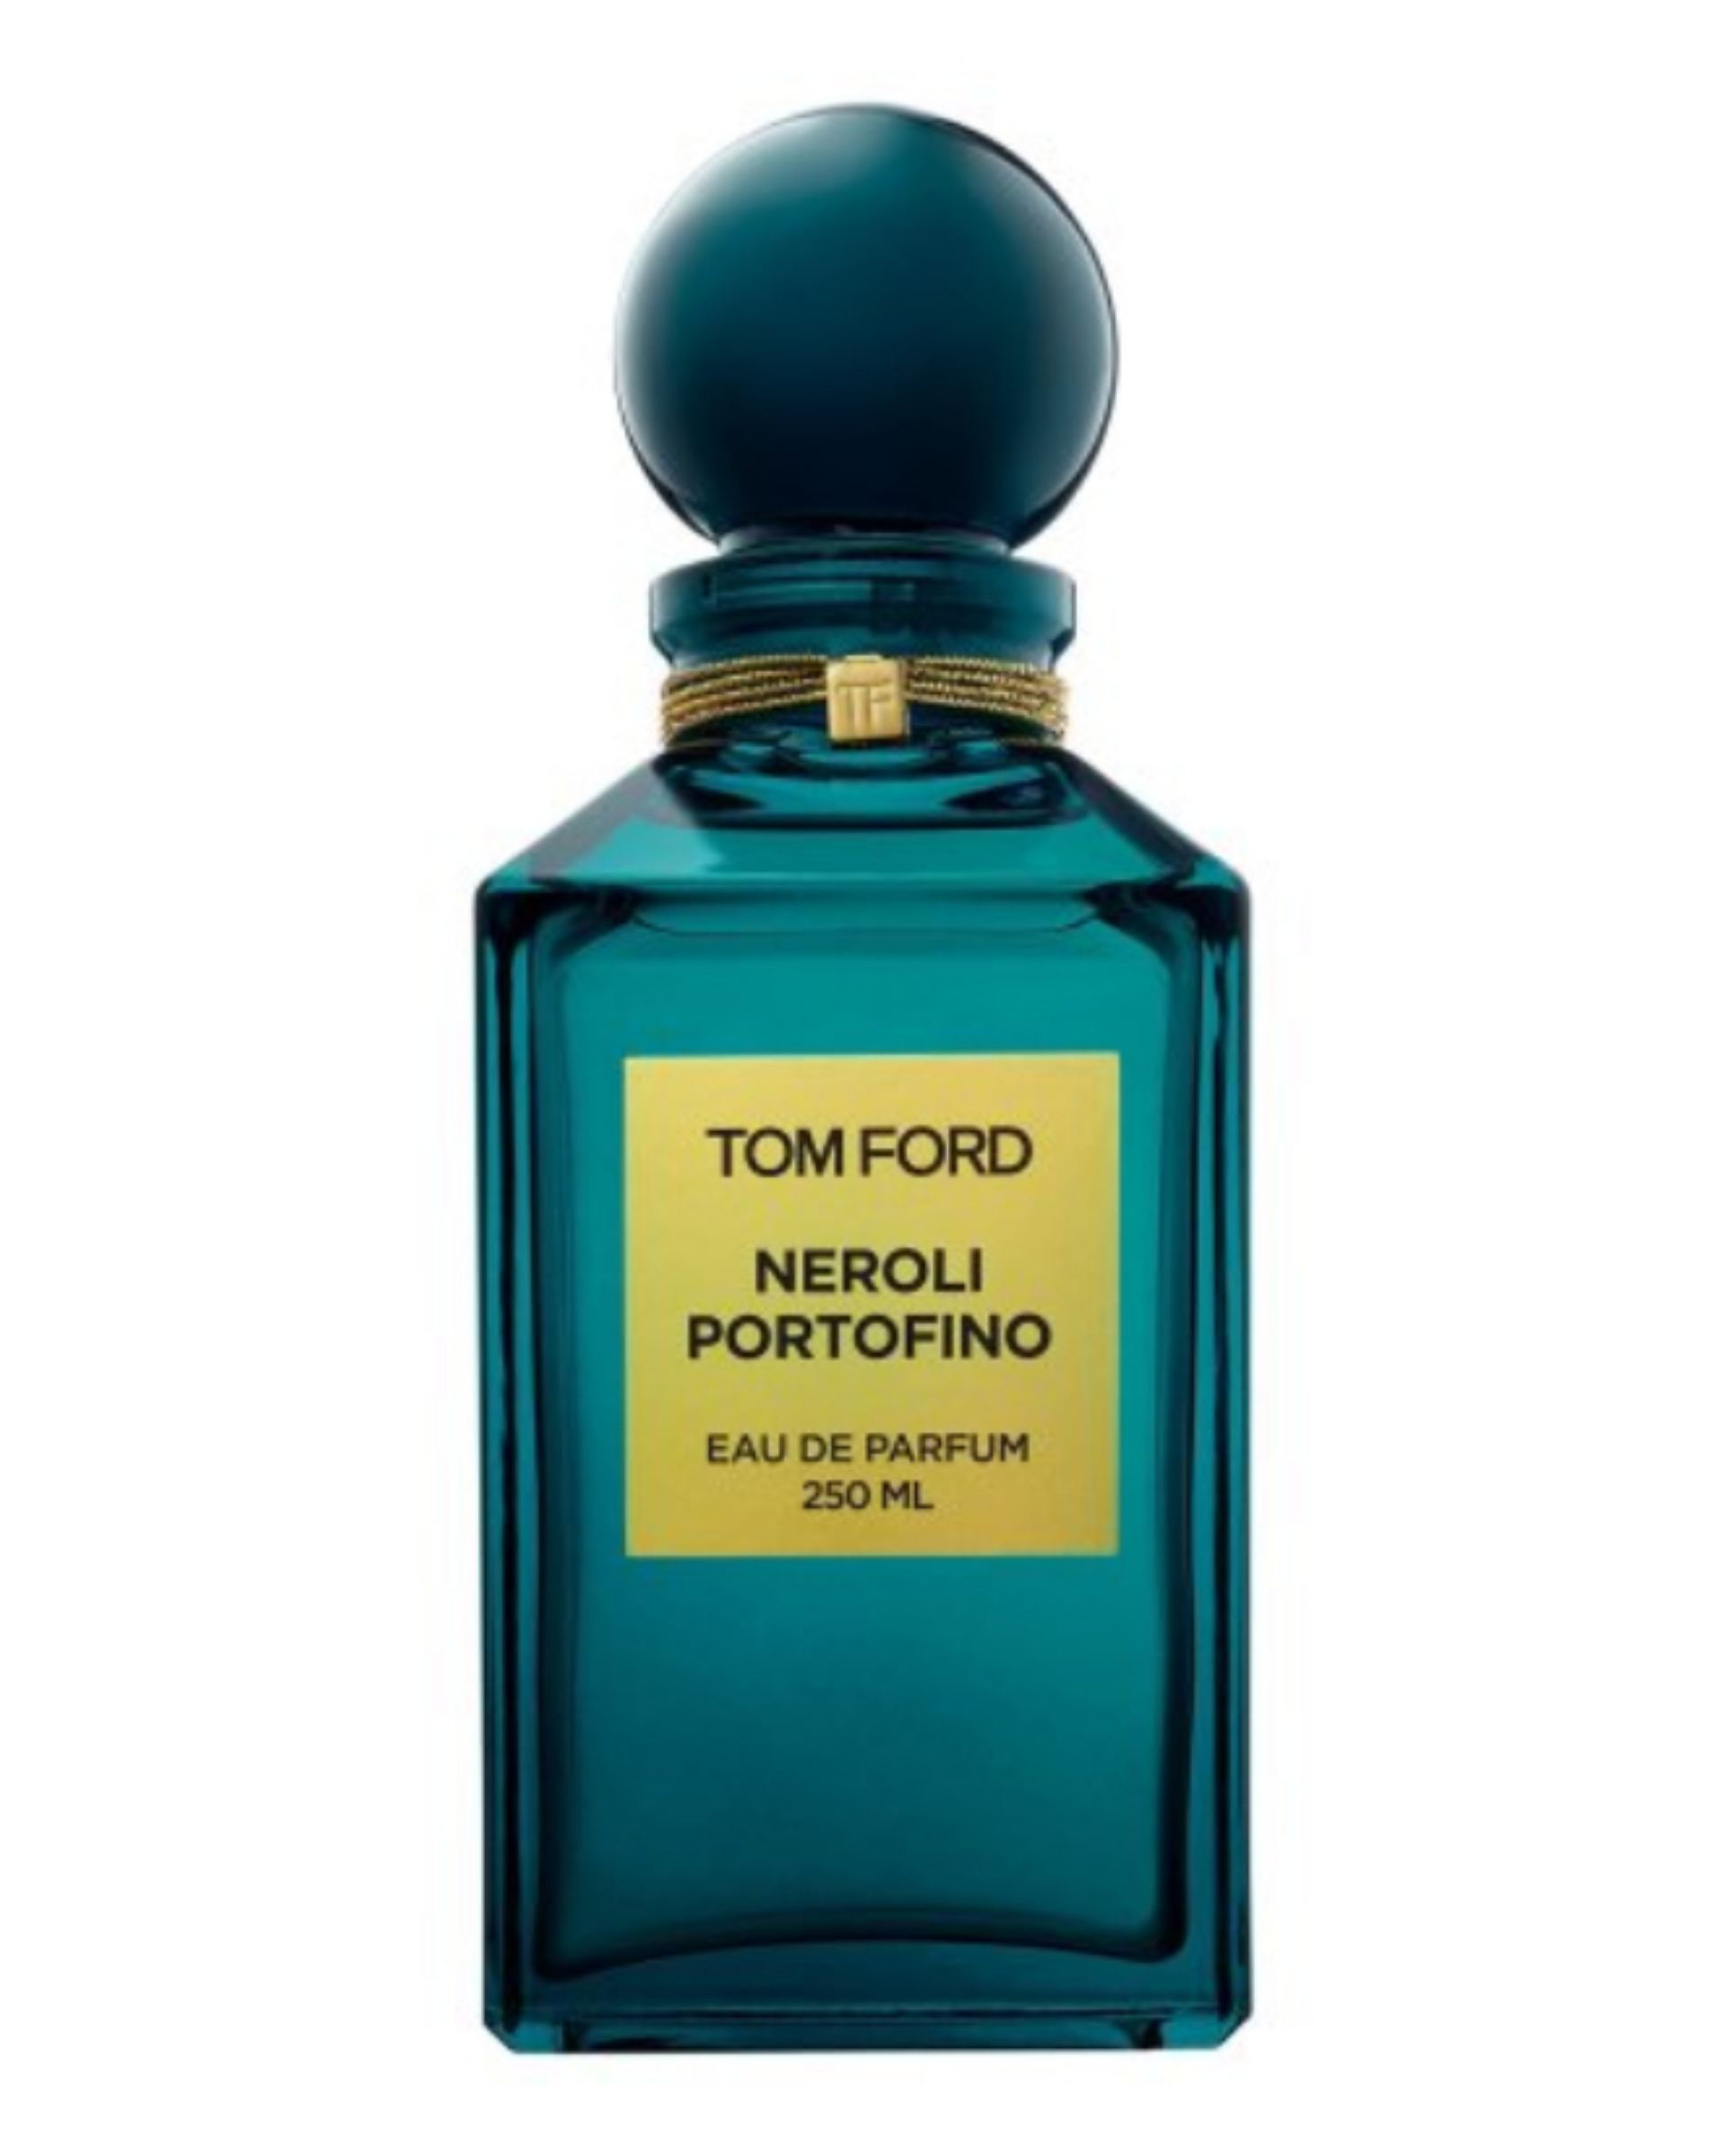 TOM FORD Neroli Portofino type Perfume Oil -